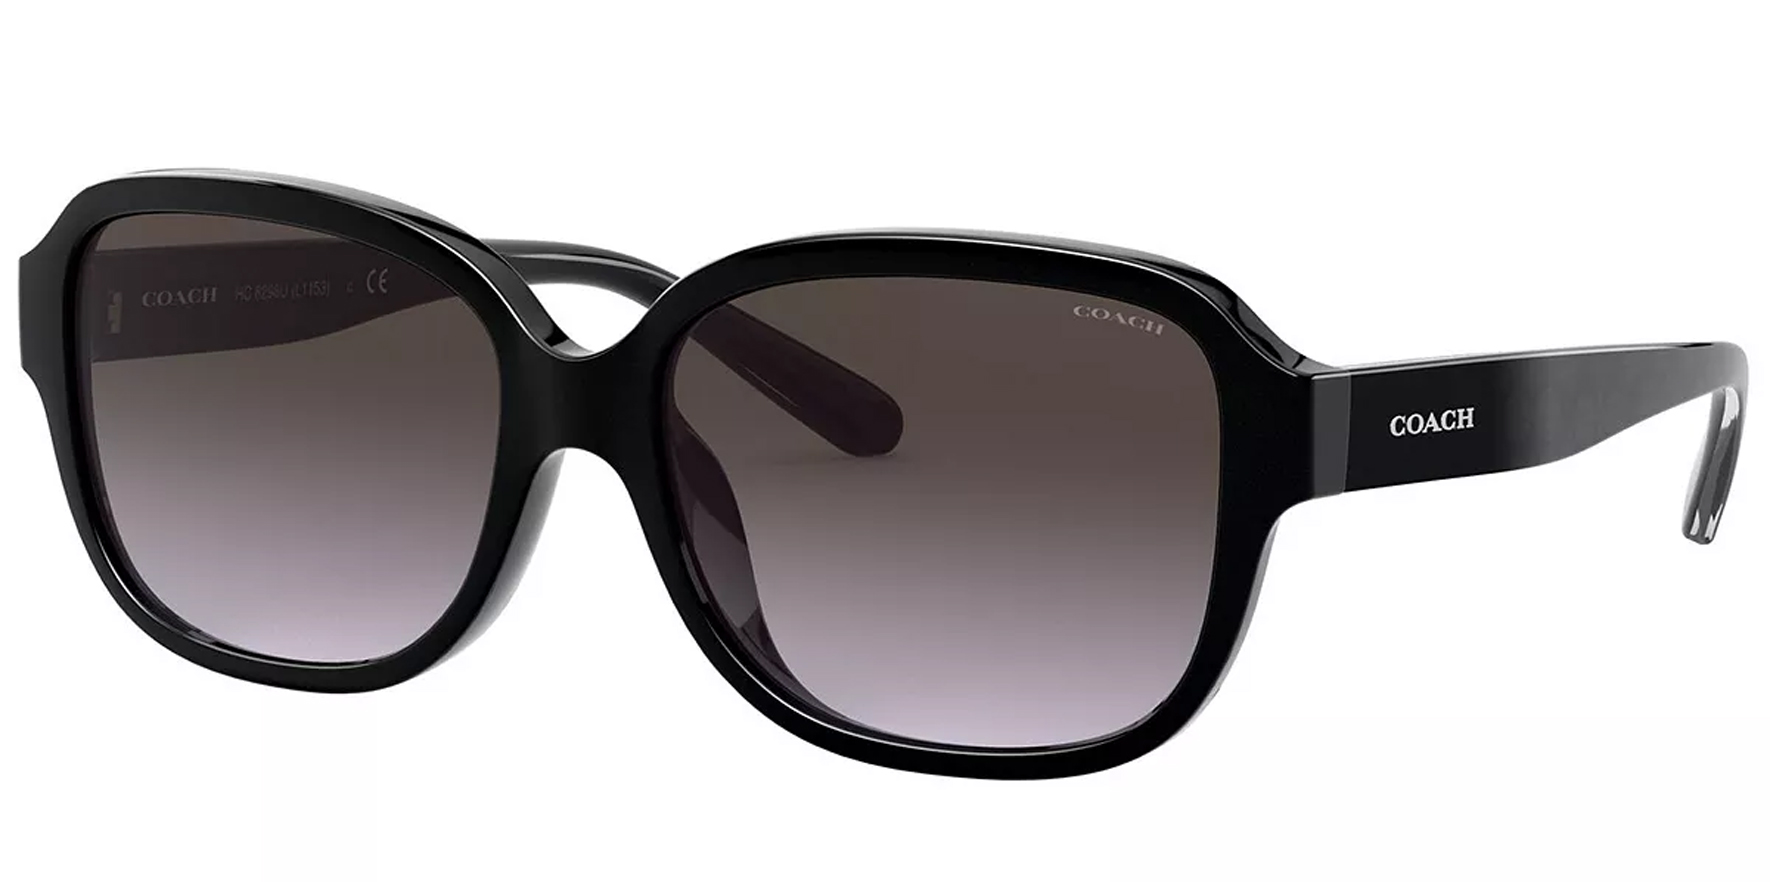 Coach Black Square Sunglasses w/ Gradient Lens